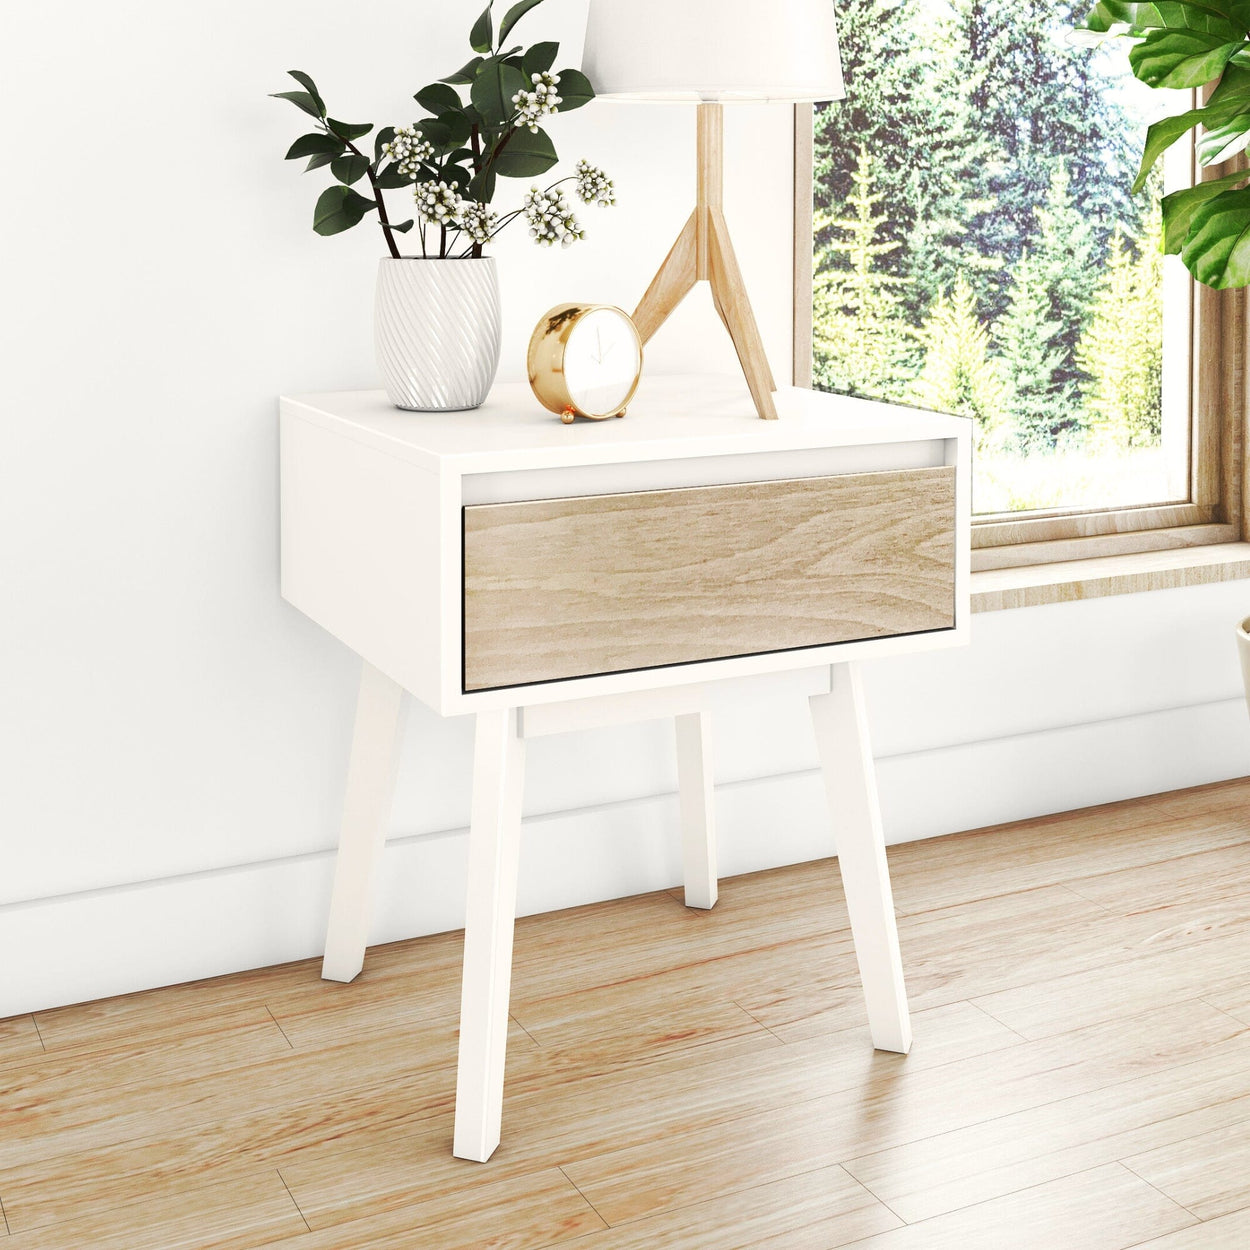 210001-202 : Furniture Scandinavian Nightstand with 1 Drawer, White/Blonde